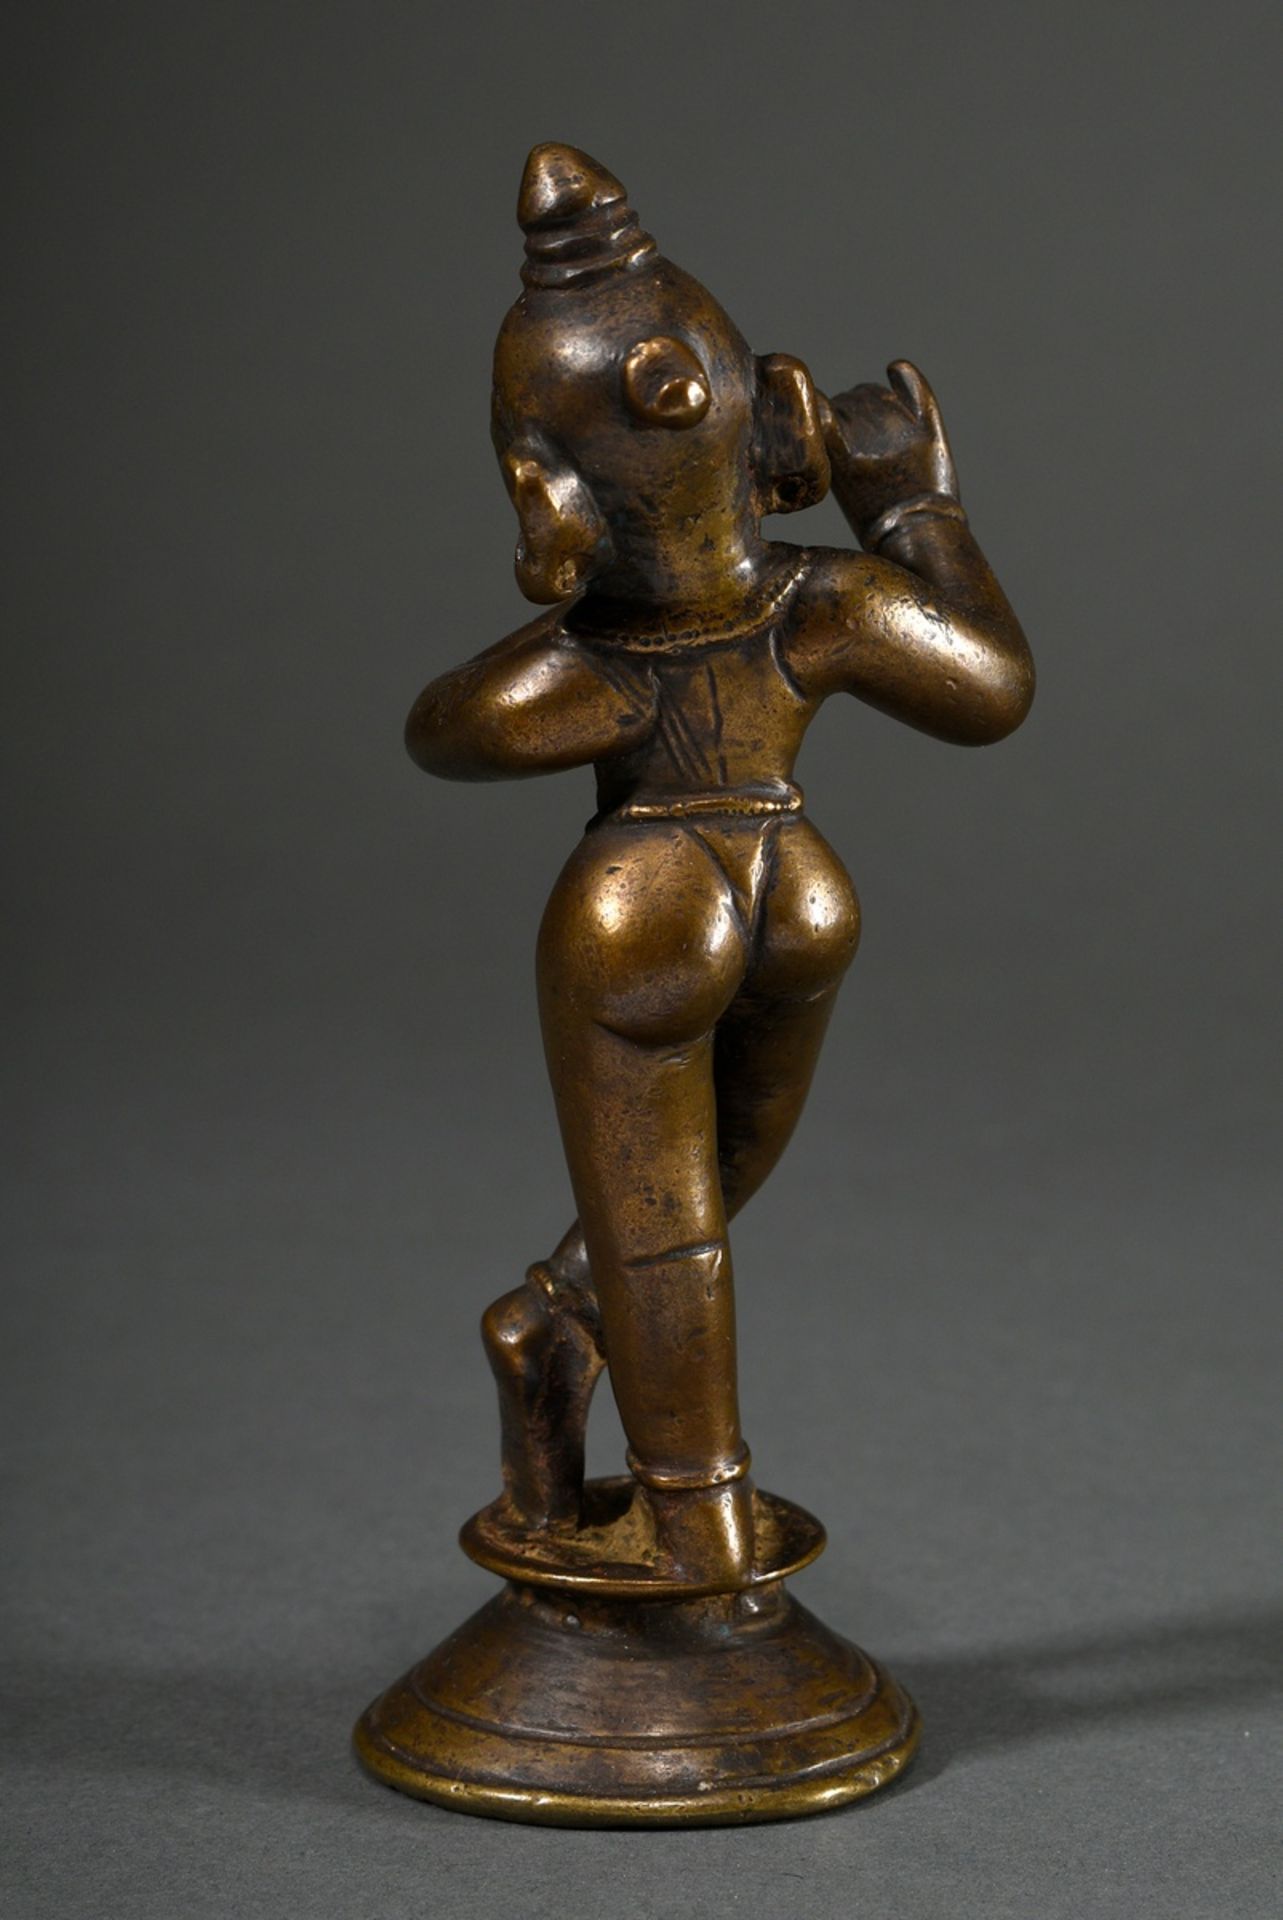 Bronze Figur "Krishna Venugopola", Indien 18. Jh., H. 15,8cm, Flöte verloren, in situ erworben um 1 - Bild 3 aus 5